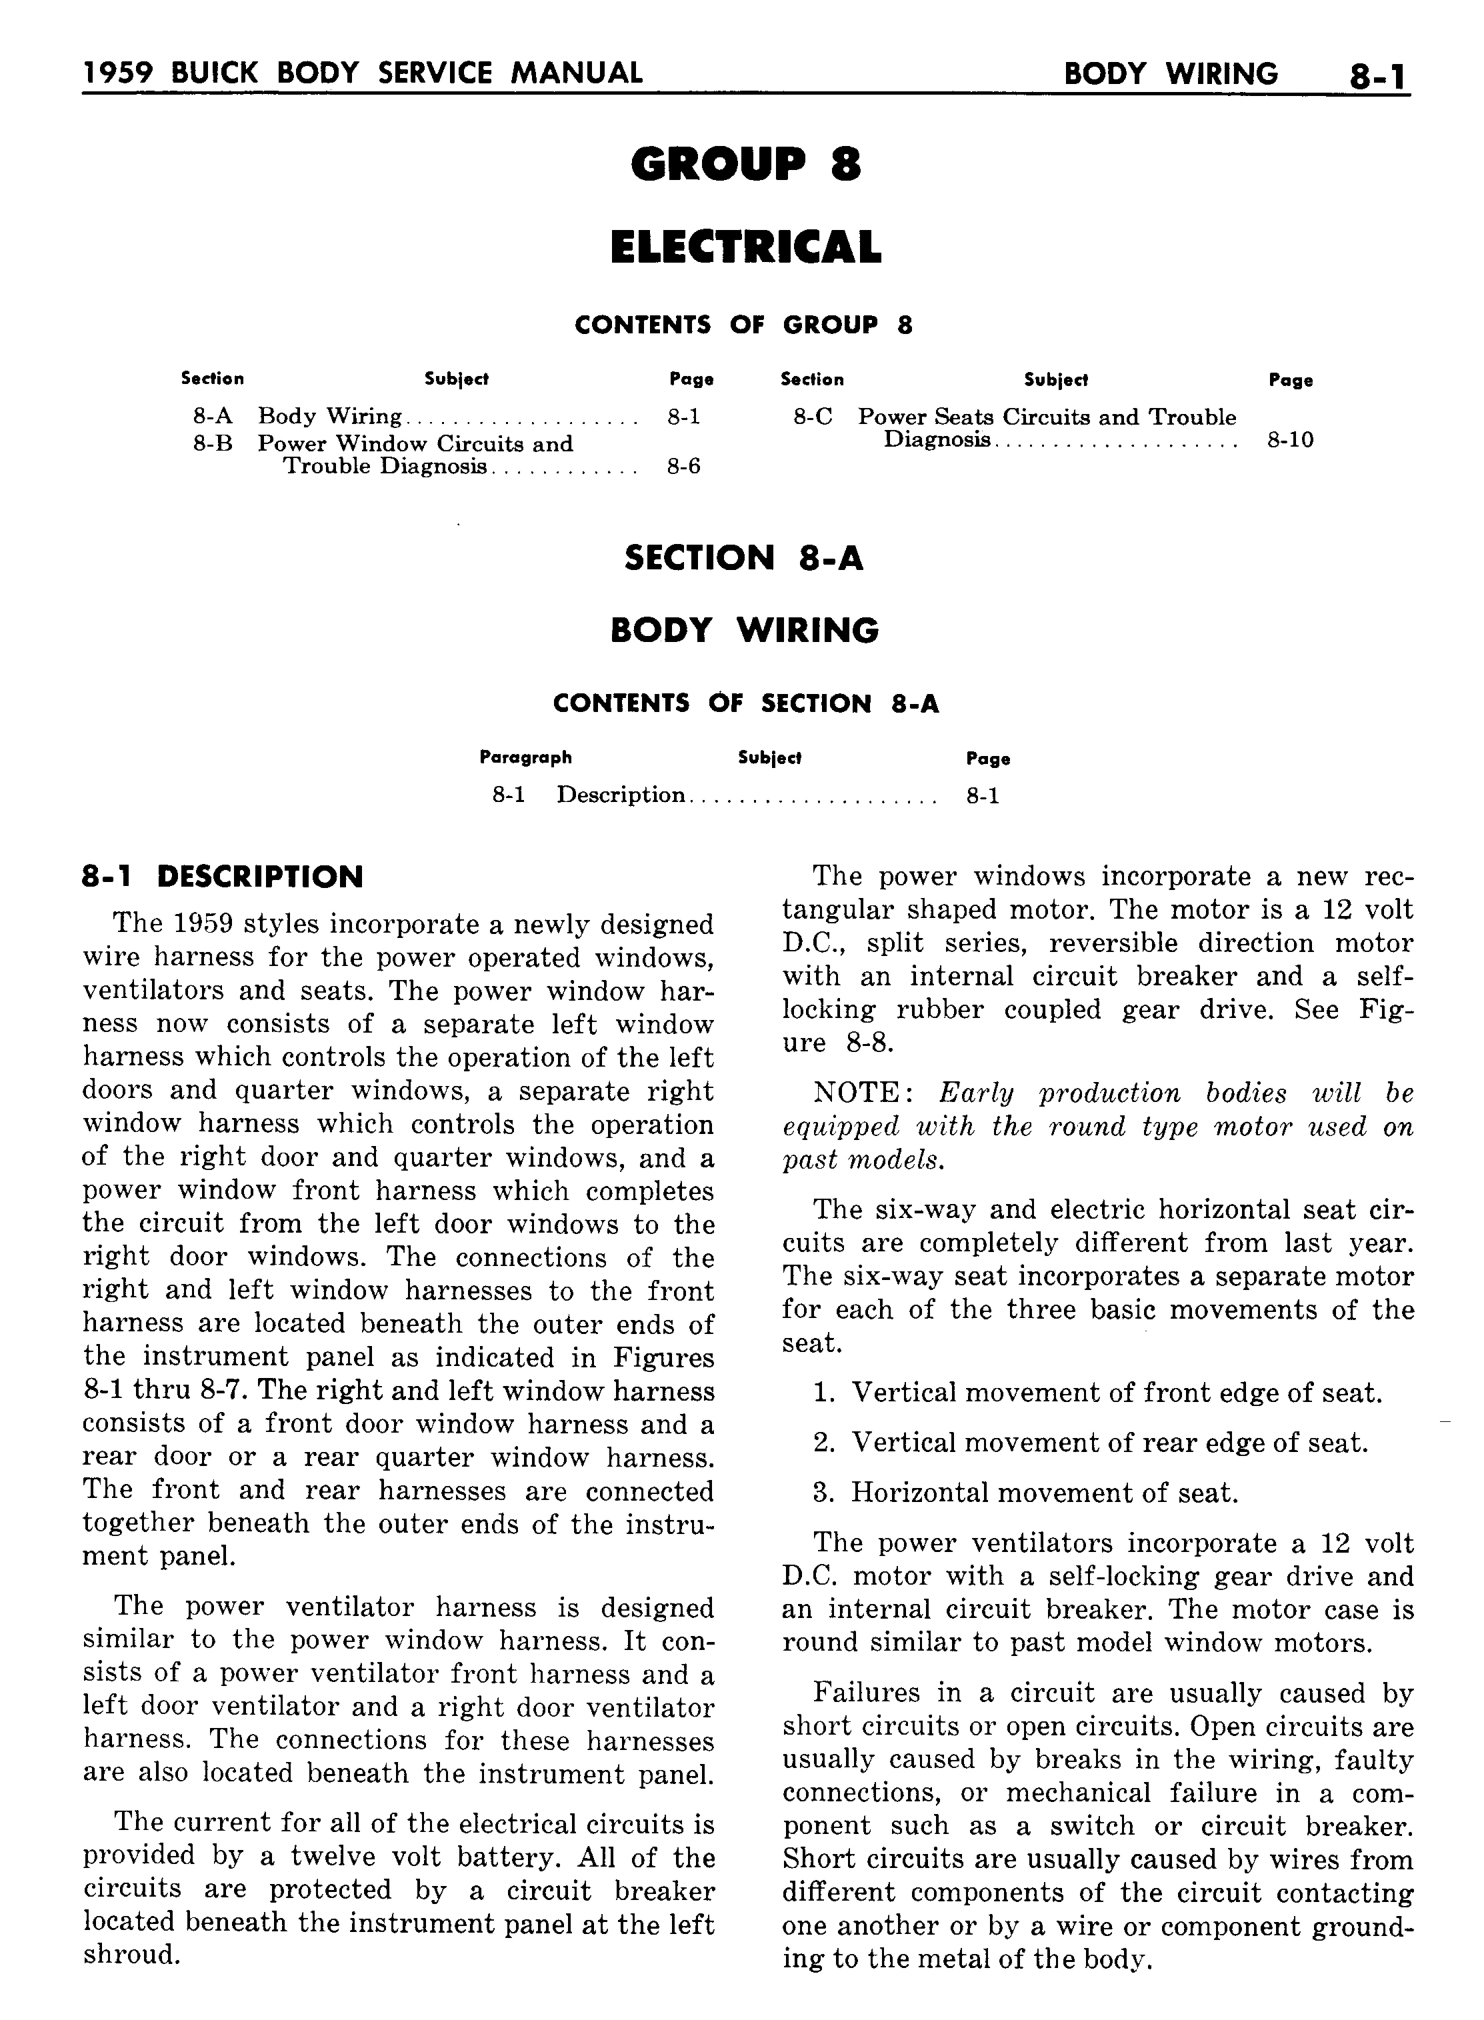 n_09 1959 Buick Body Service-Electrical_1.jpg